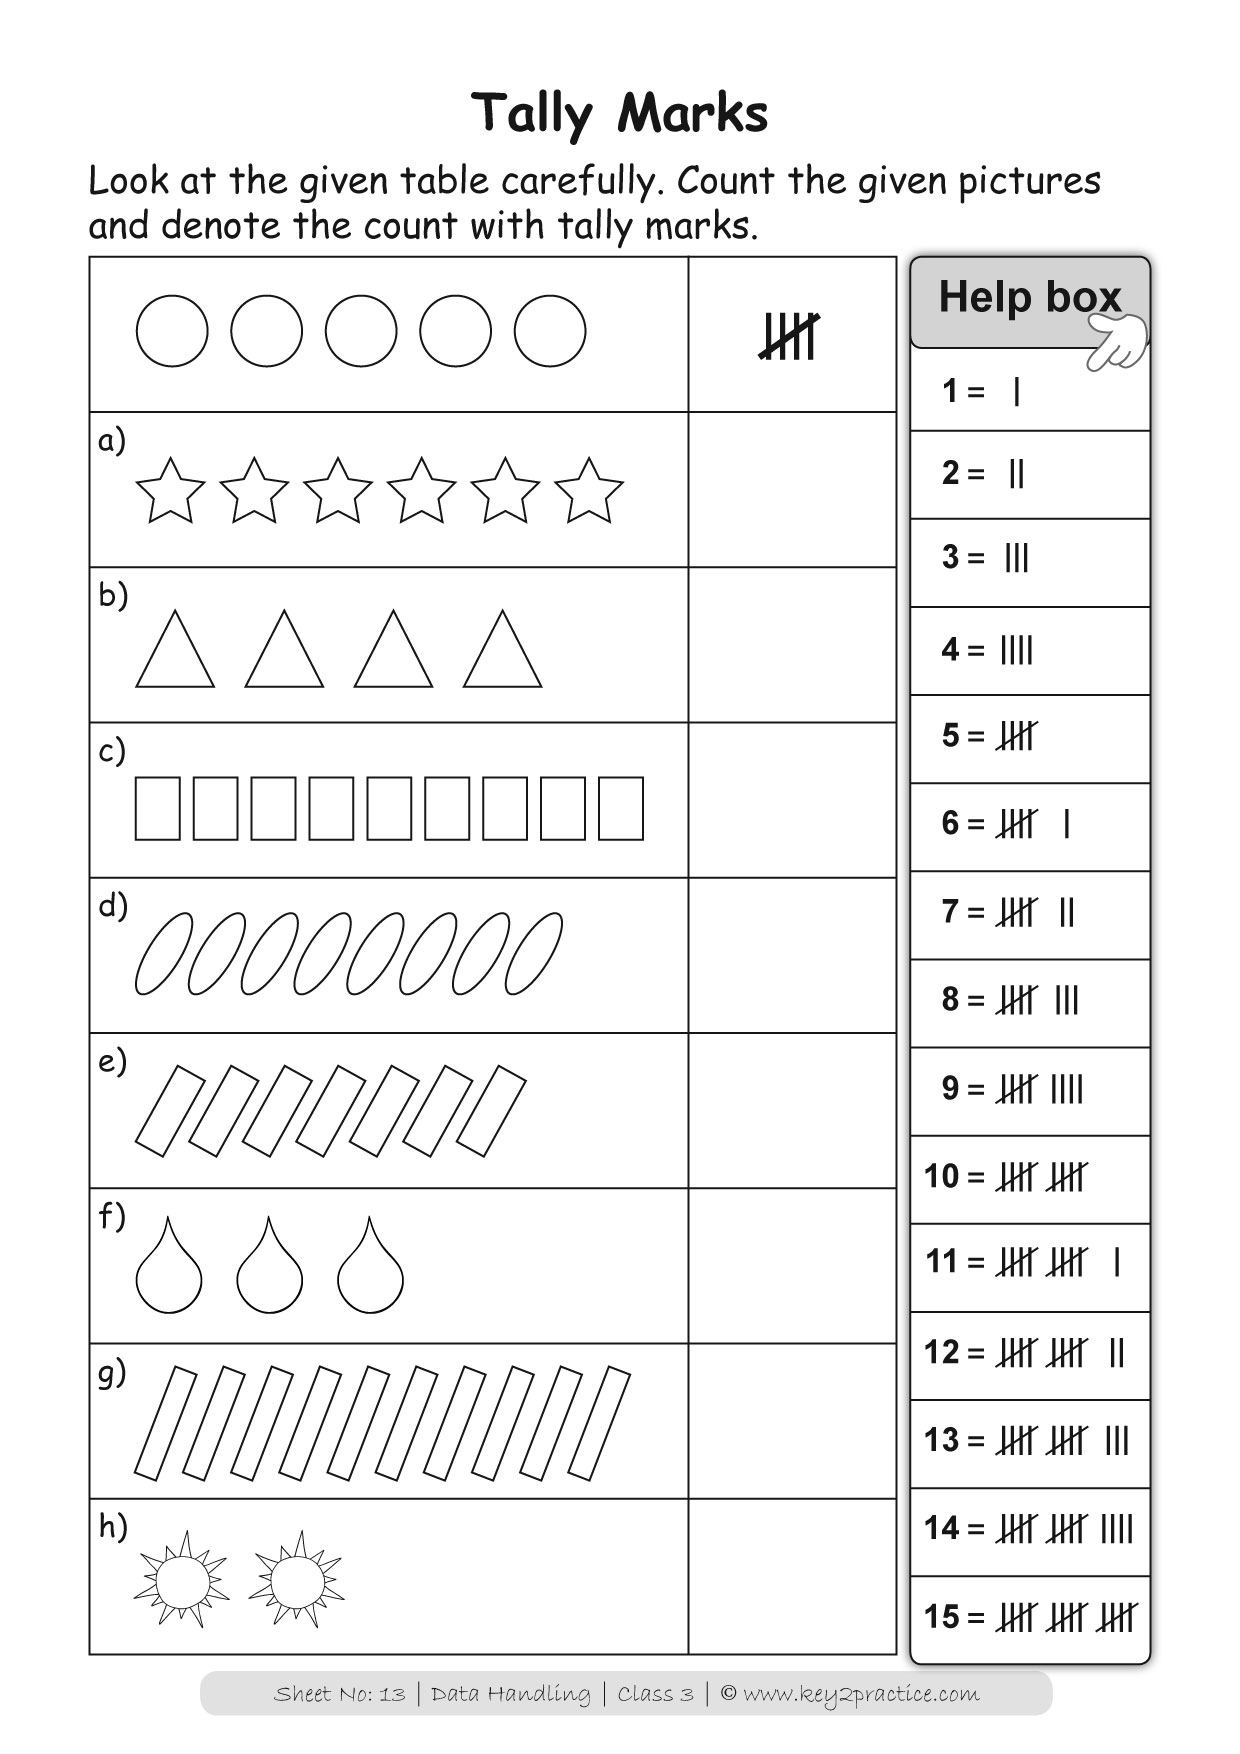 maths worksheets grade 3 data handling key2practice workbooks